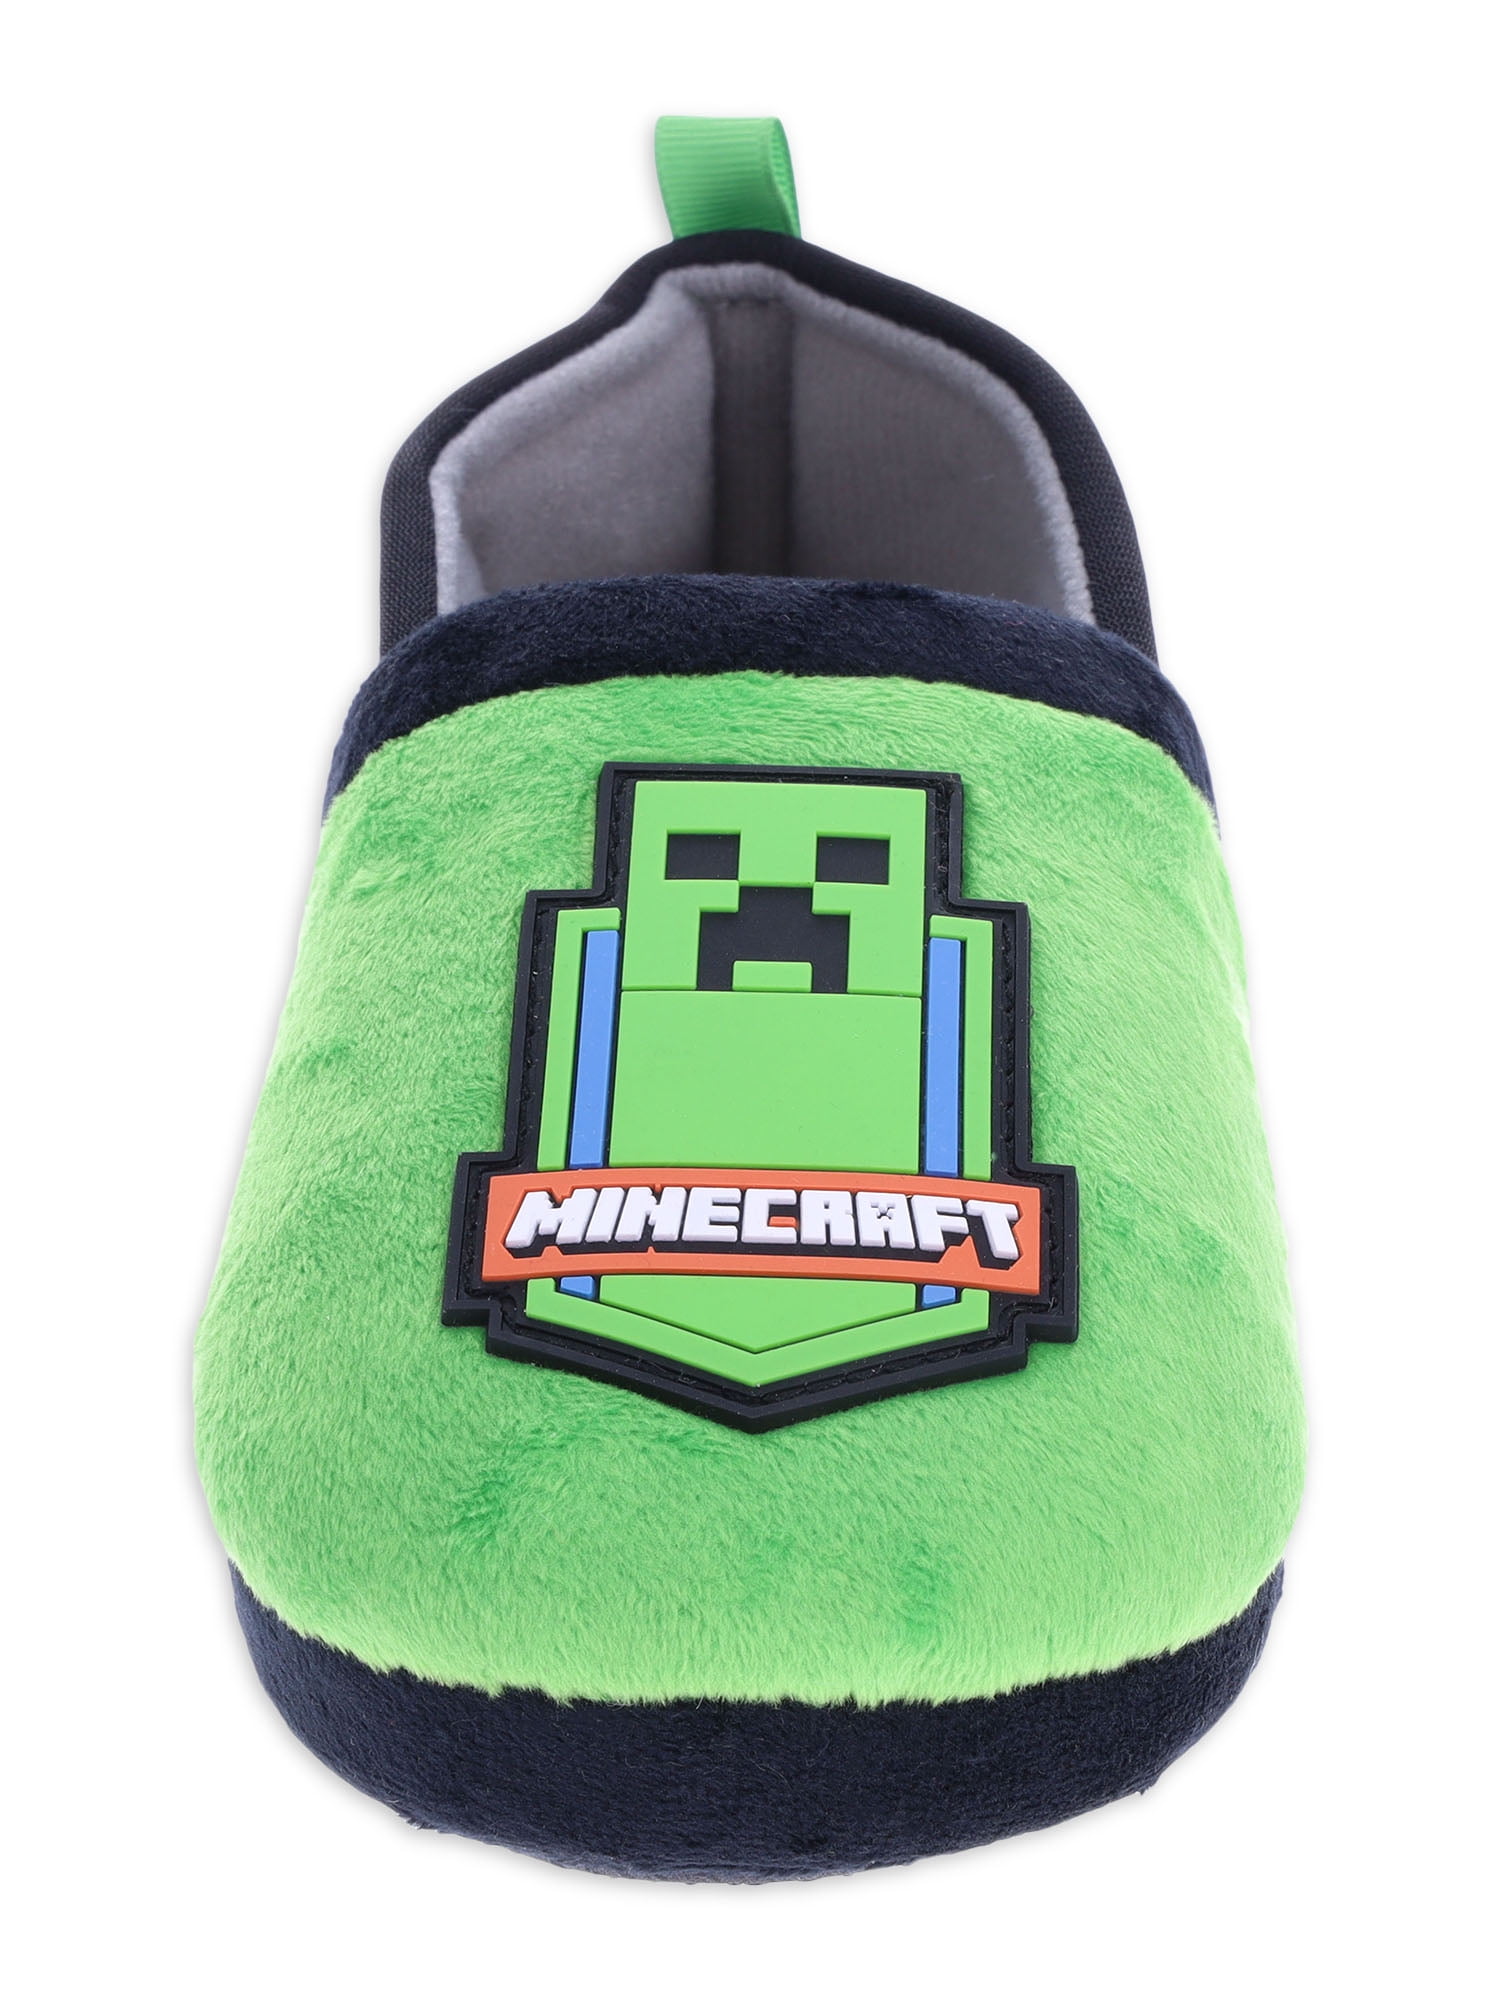 Minecraft Creeper Boy's Slipper 3D Green Plush Novelty Footwear